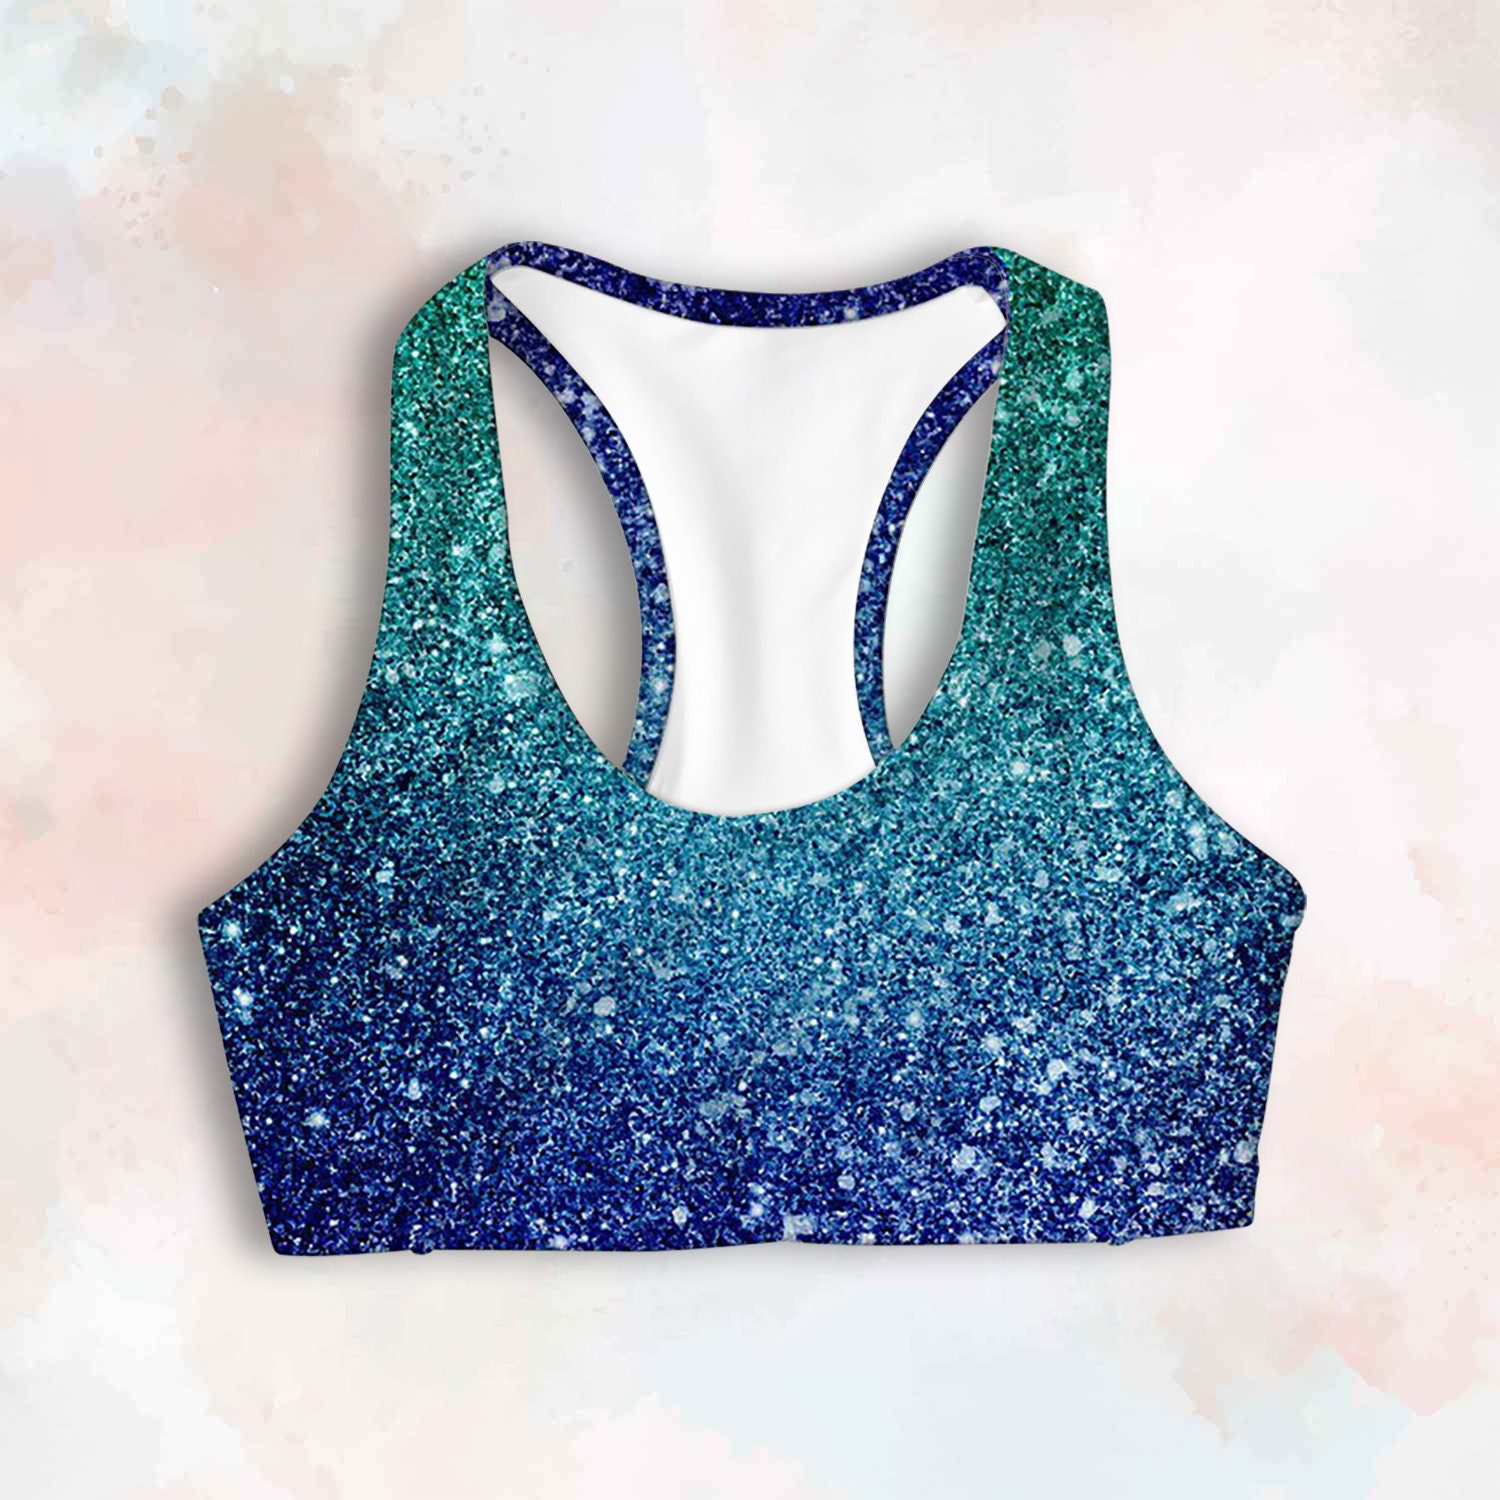 Bling Sports Bra, Shiny Blue Crop Top, Glitter Print Gym Bra